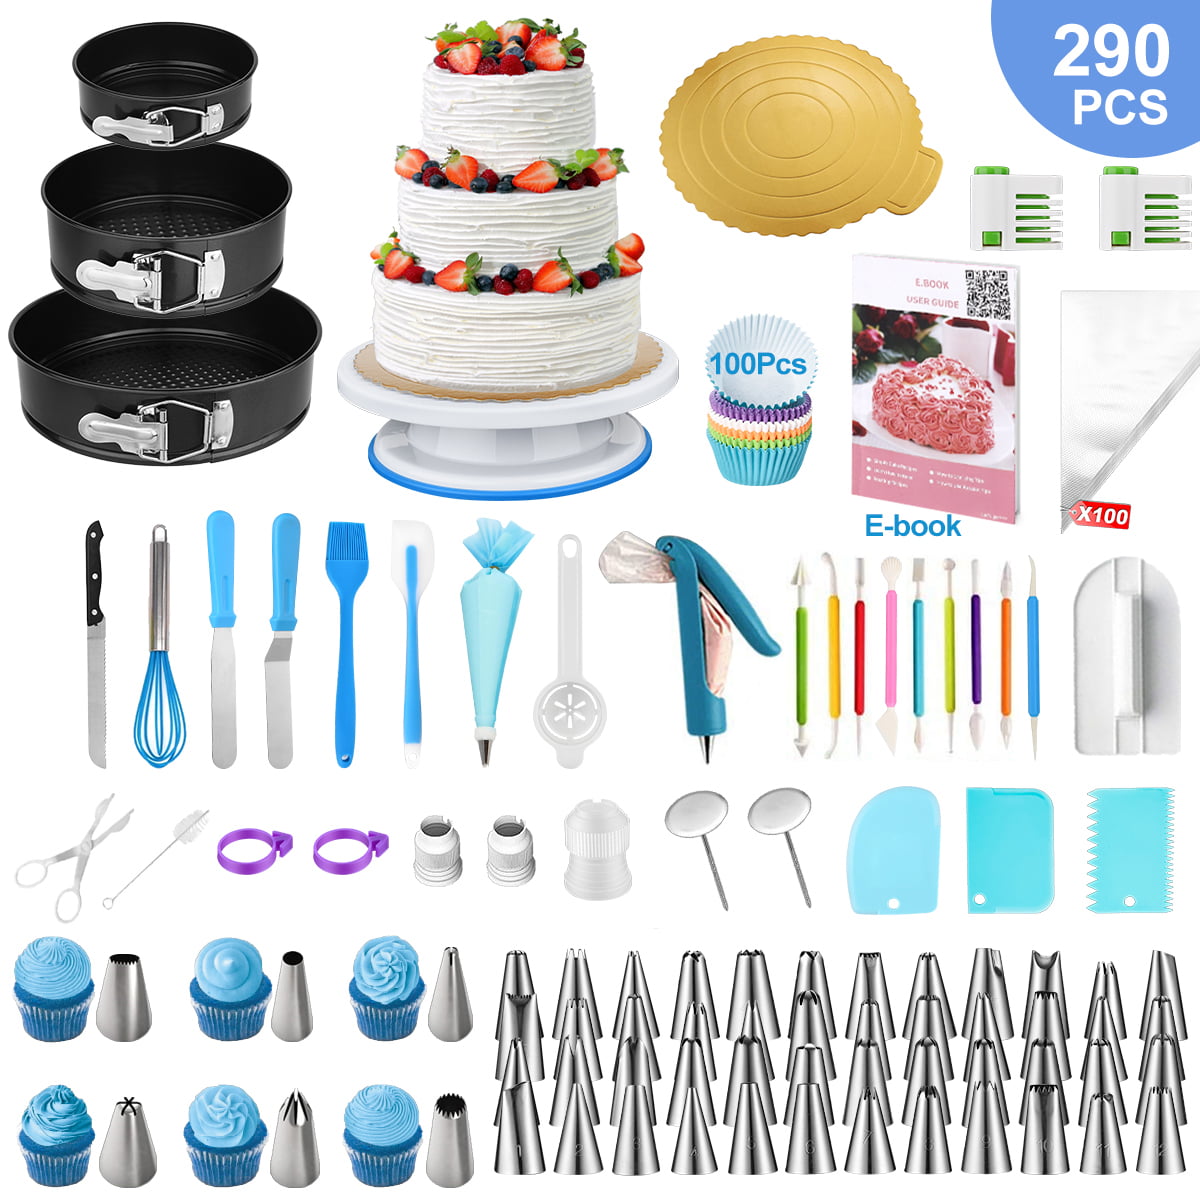 Uarter 290 Pcs Cake Decorating Kit Cake Decorating Supplies with ...